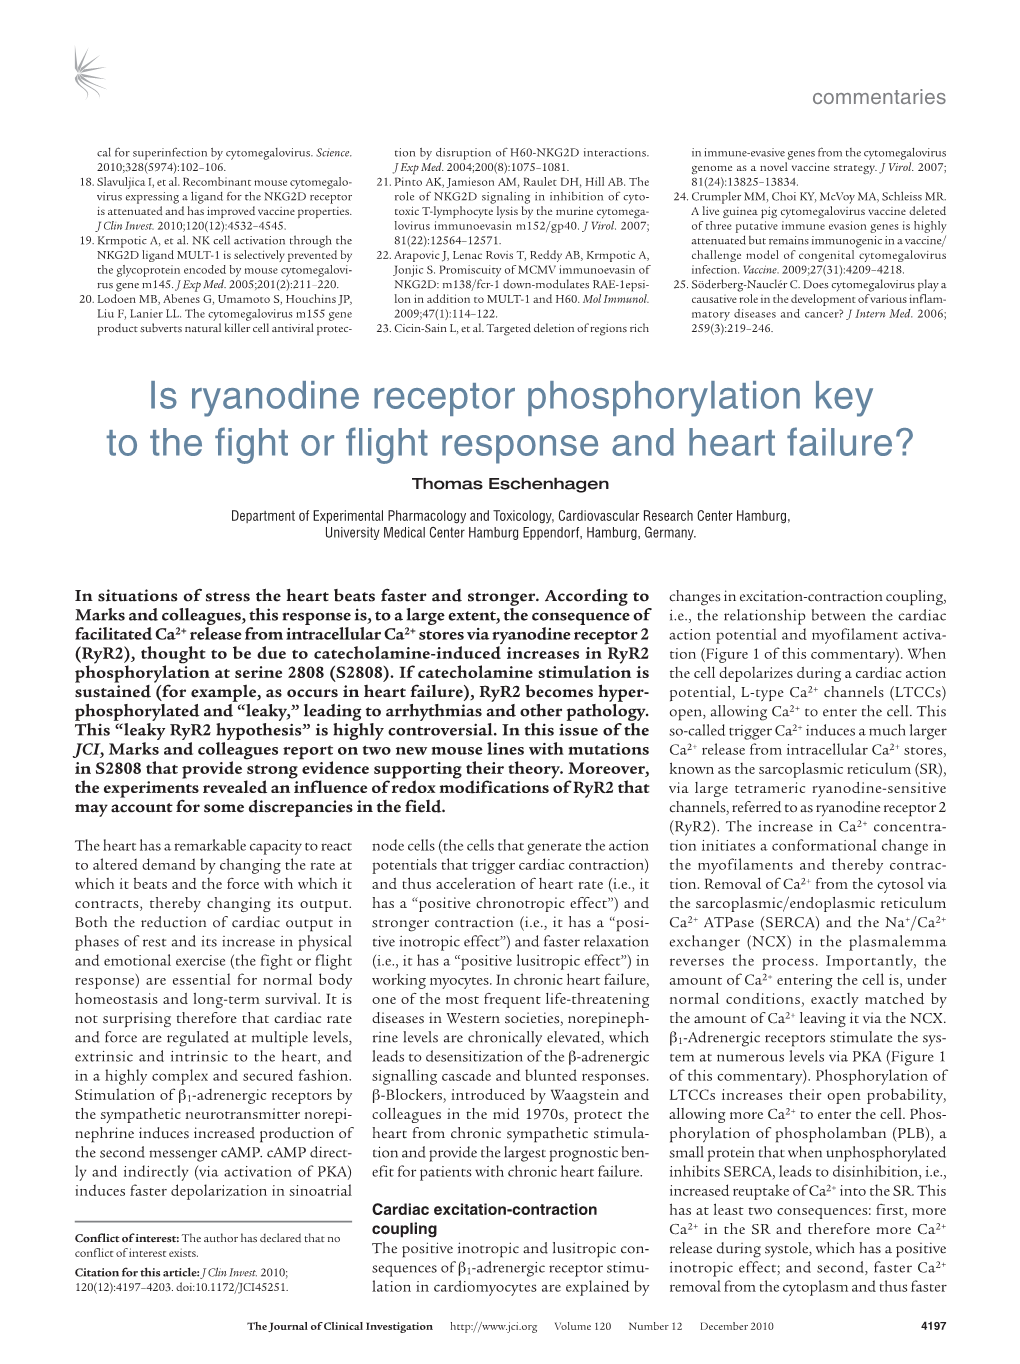 Is Ryanodine Receptor Phosphorylation Key to the Fight Or Flight Response and Heart Failure? Thomas Eschenhagen